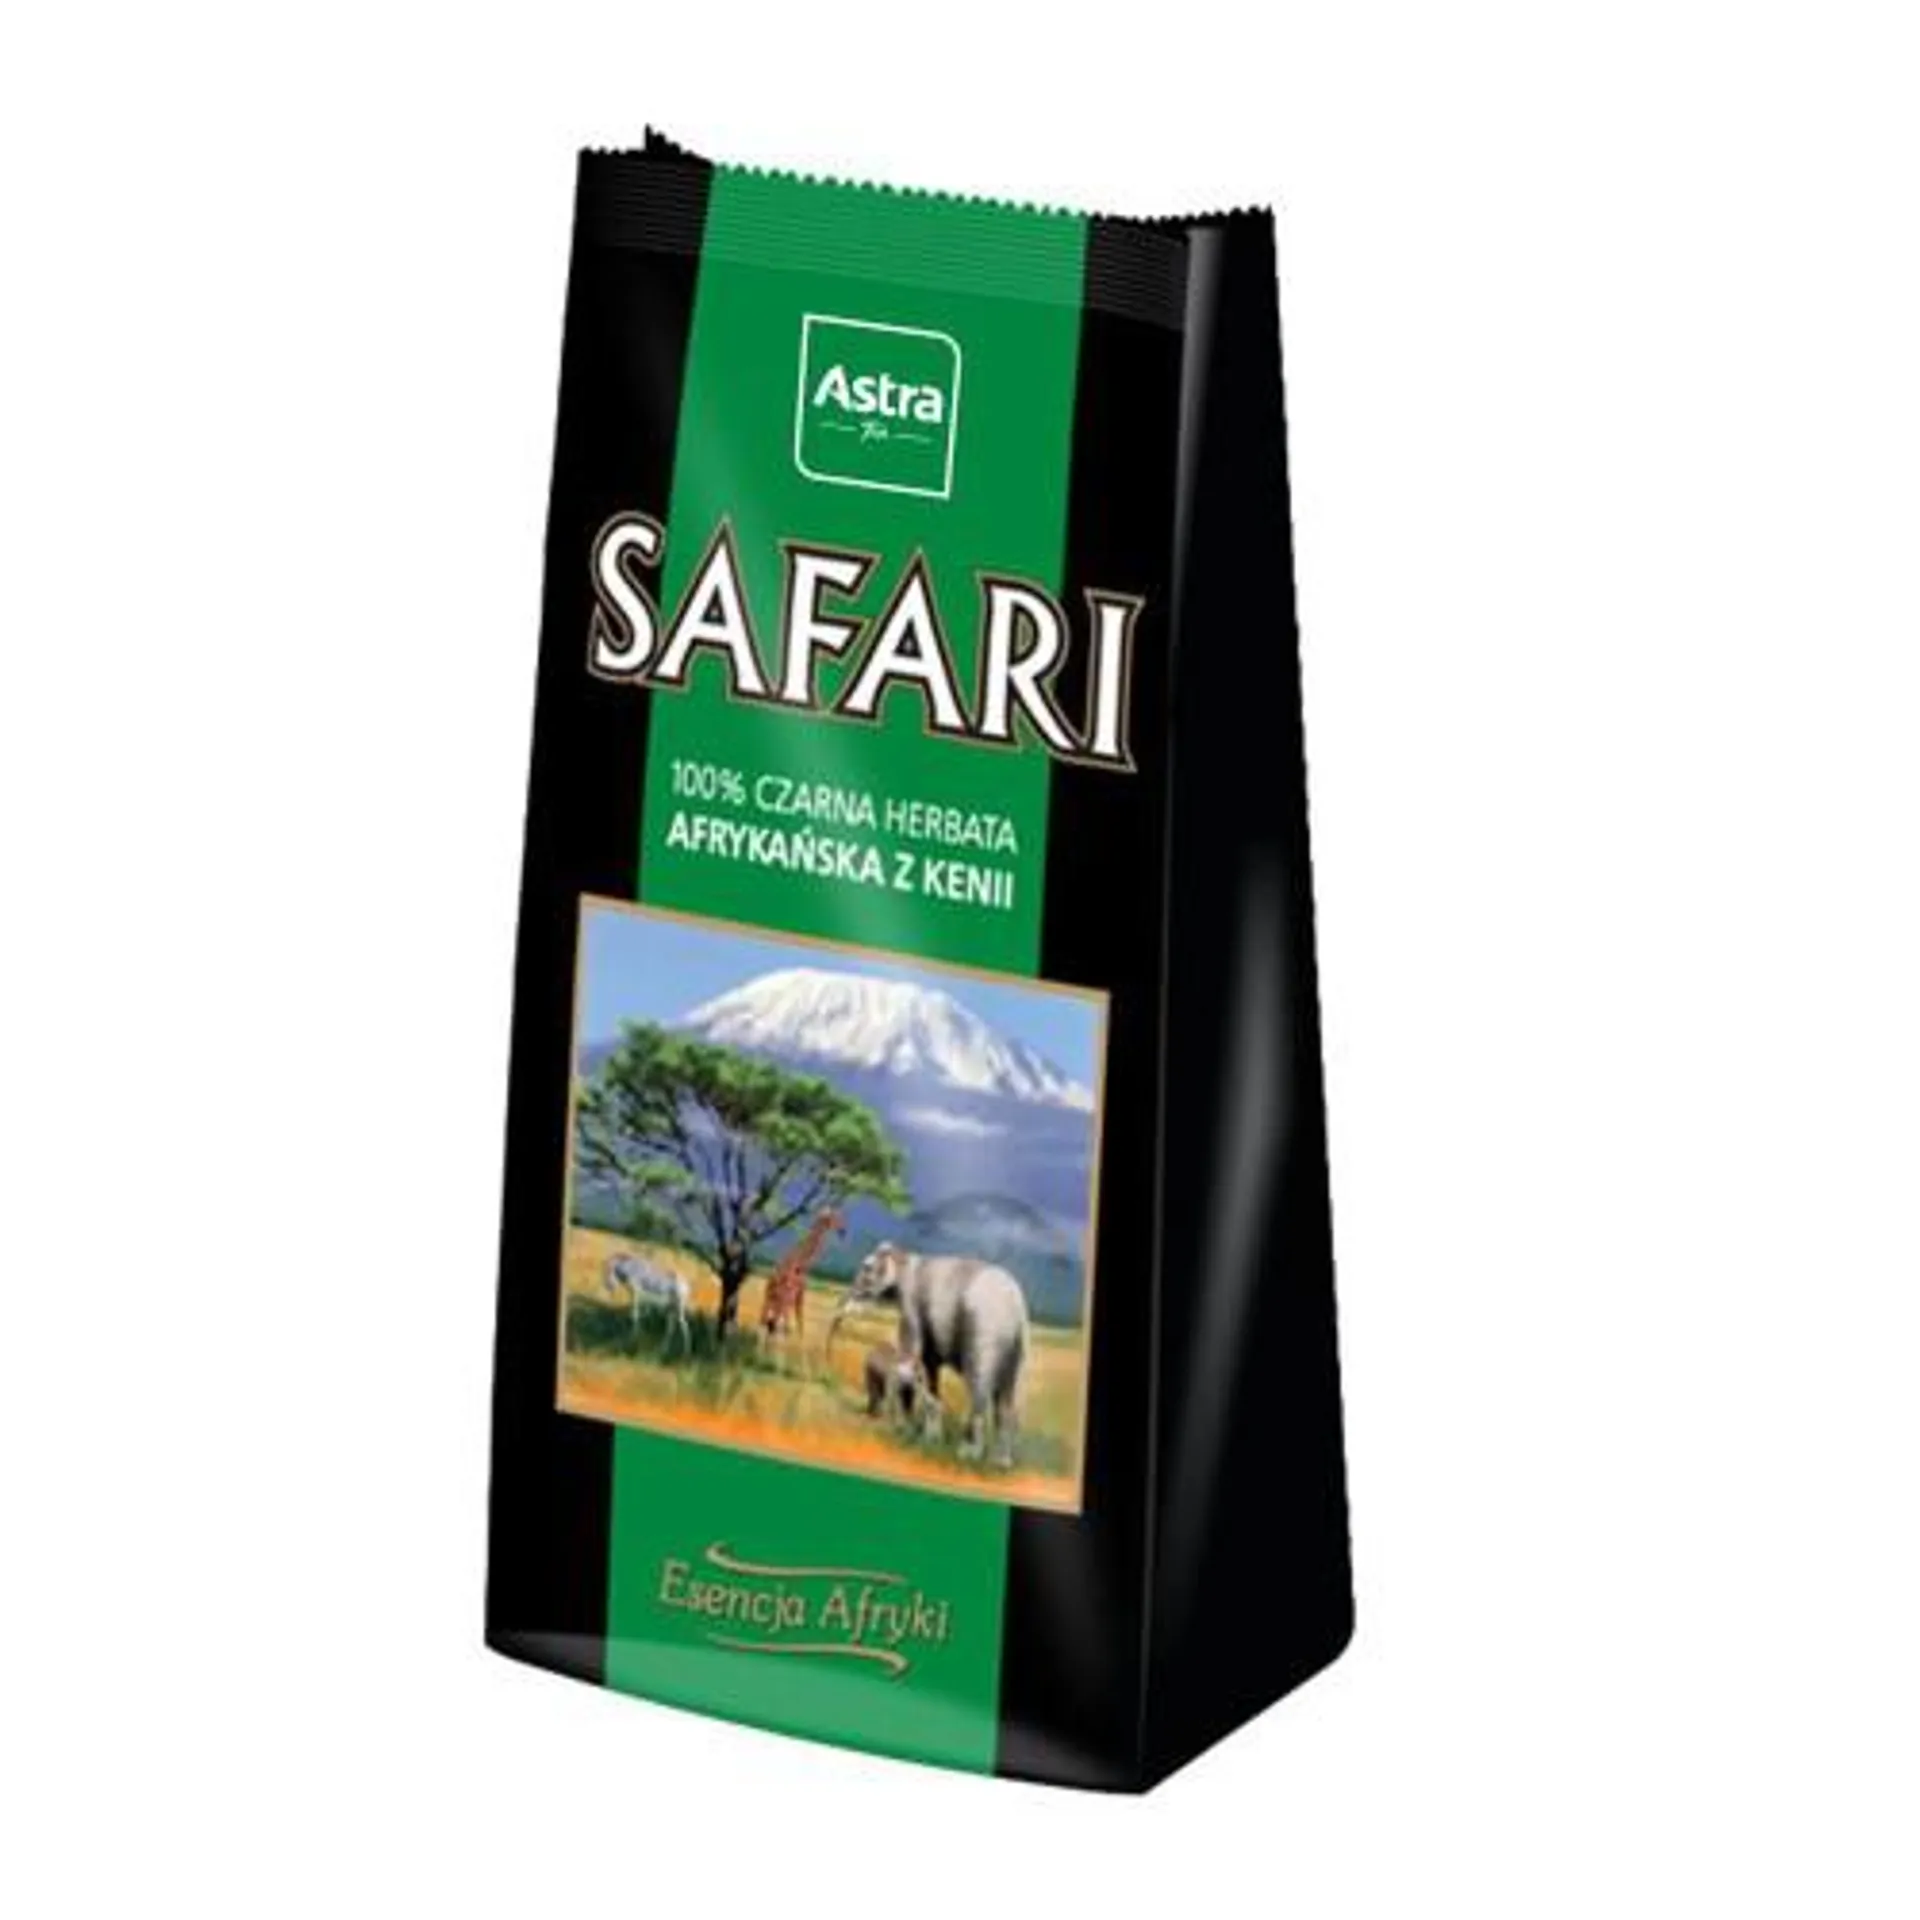 Herbata Astra Safari 100g